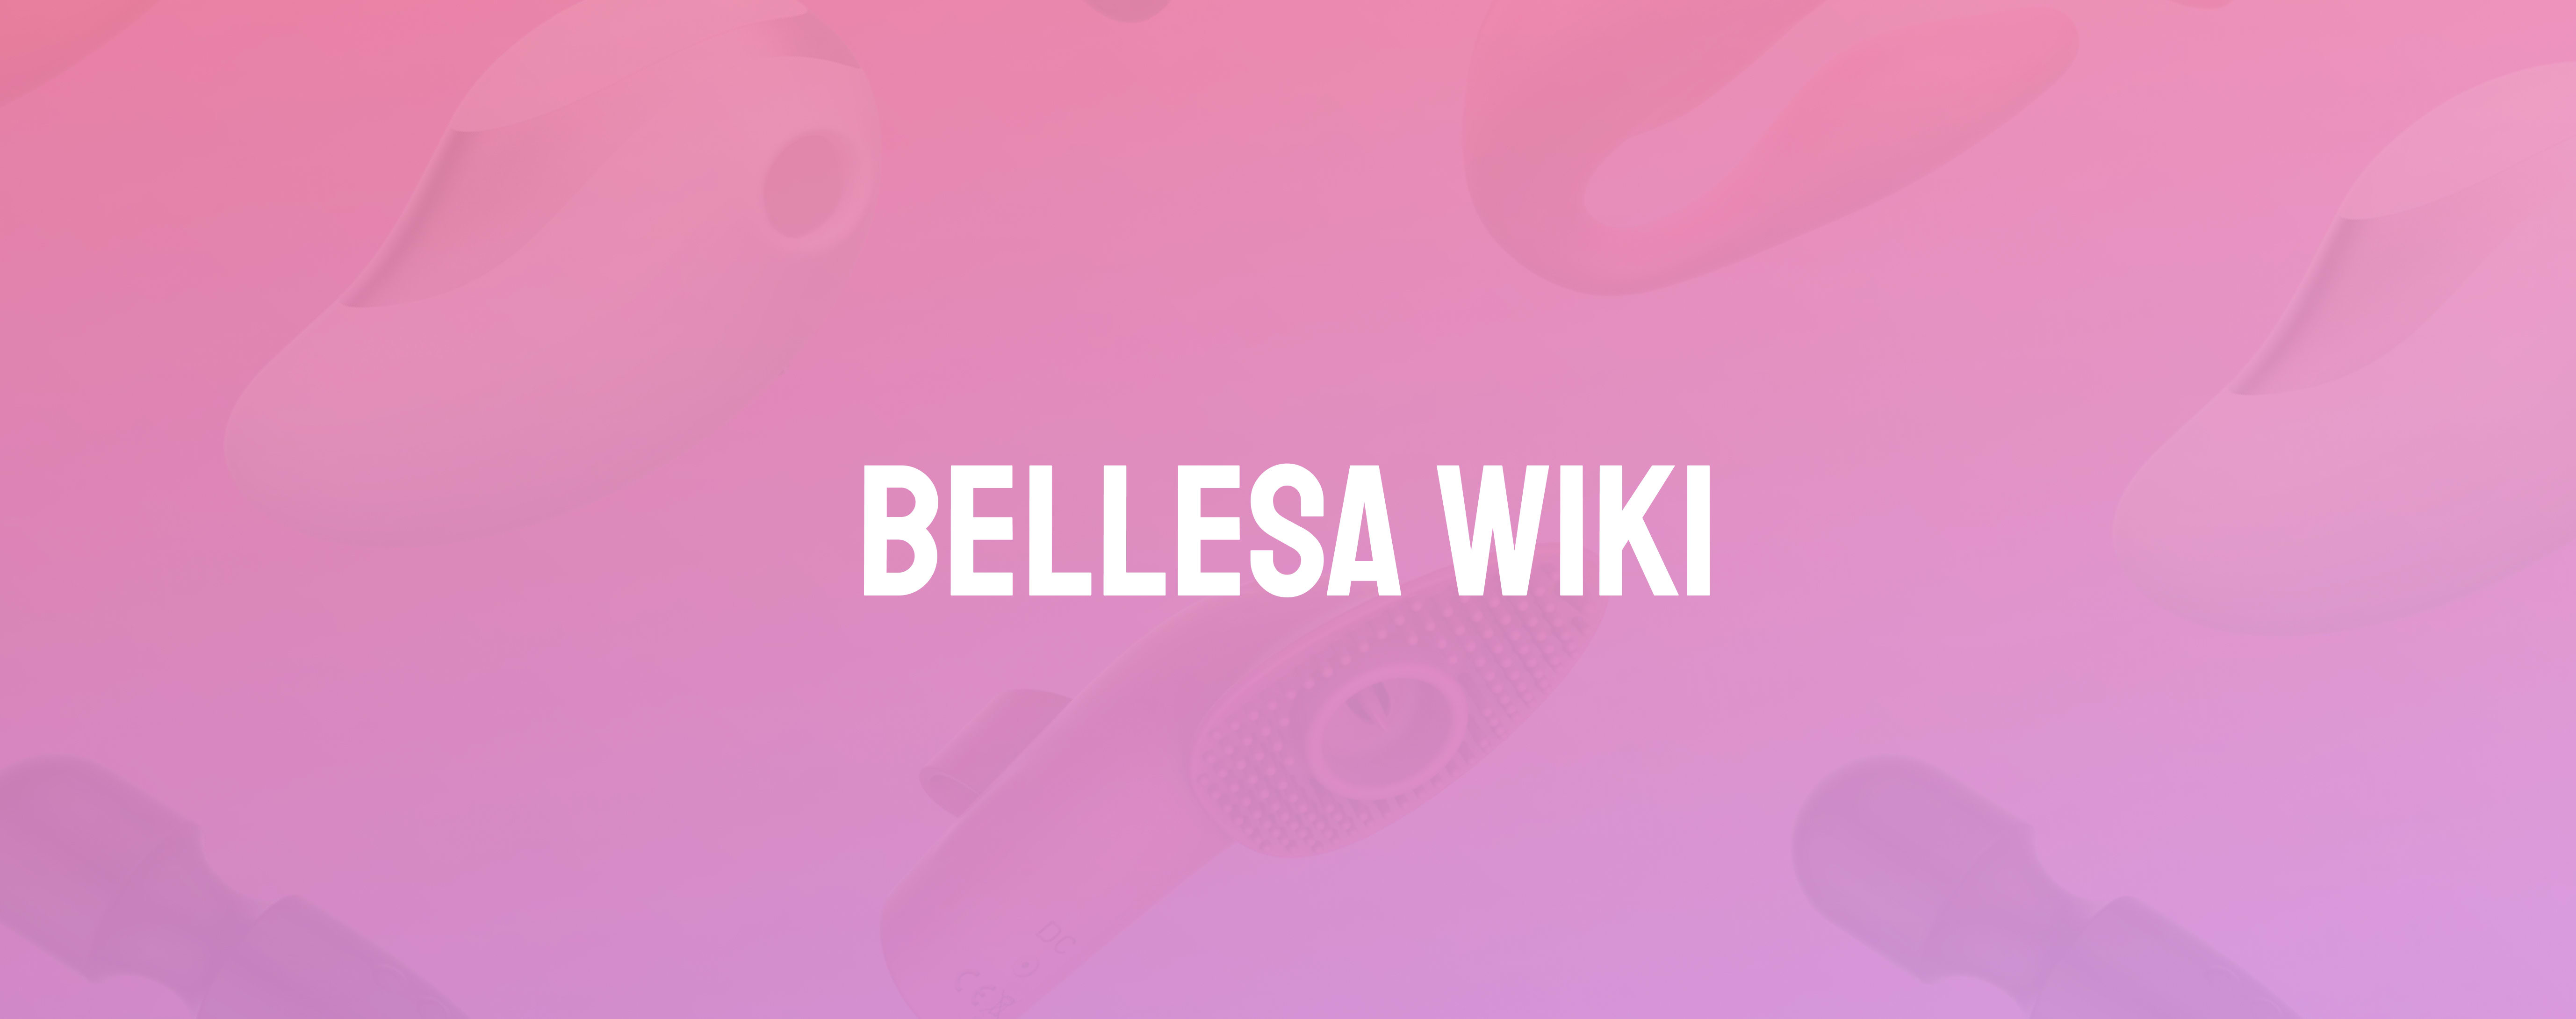 Group Sex - Bellesa Wiki Sex Toys Blog pic